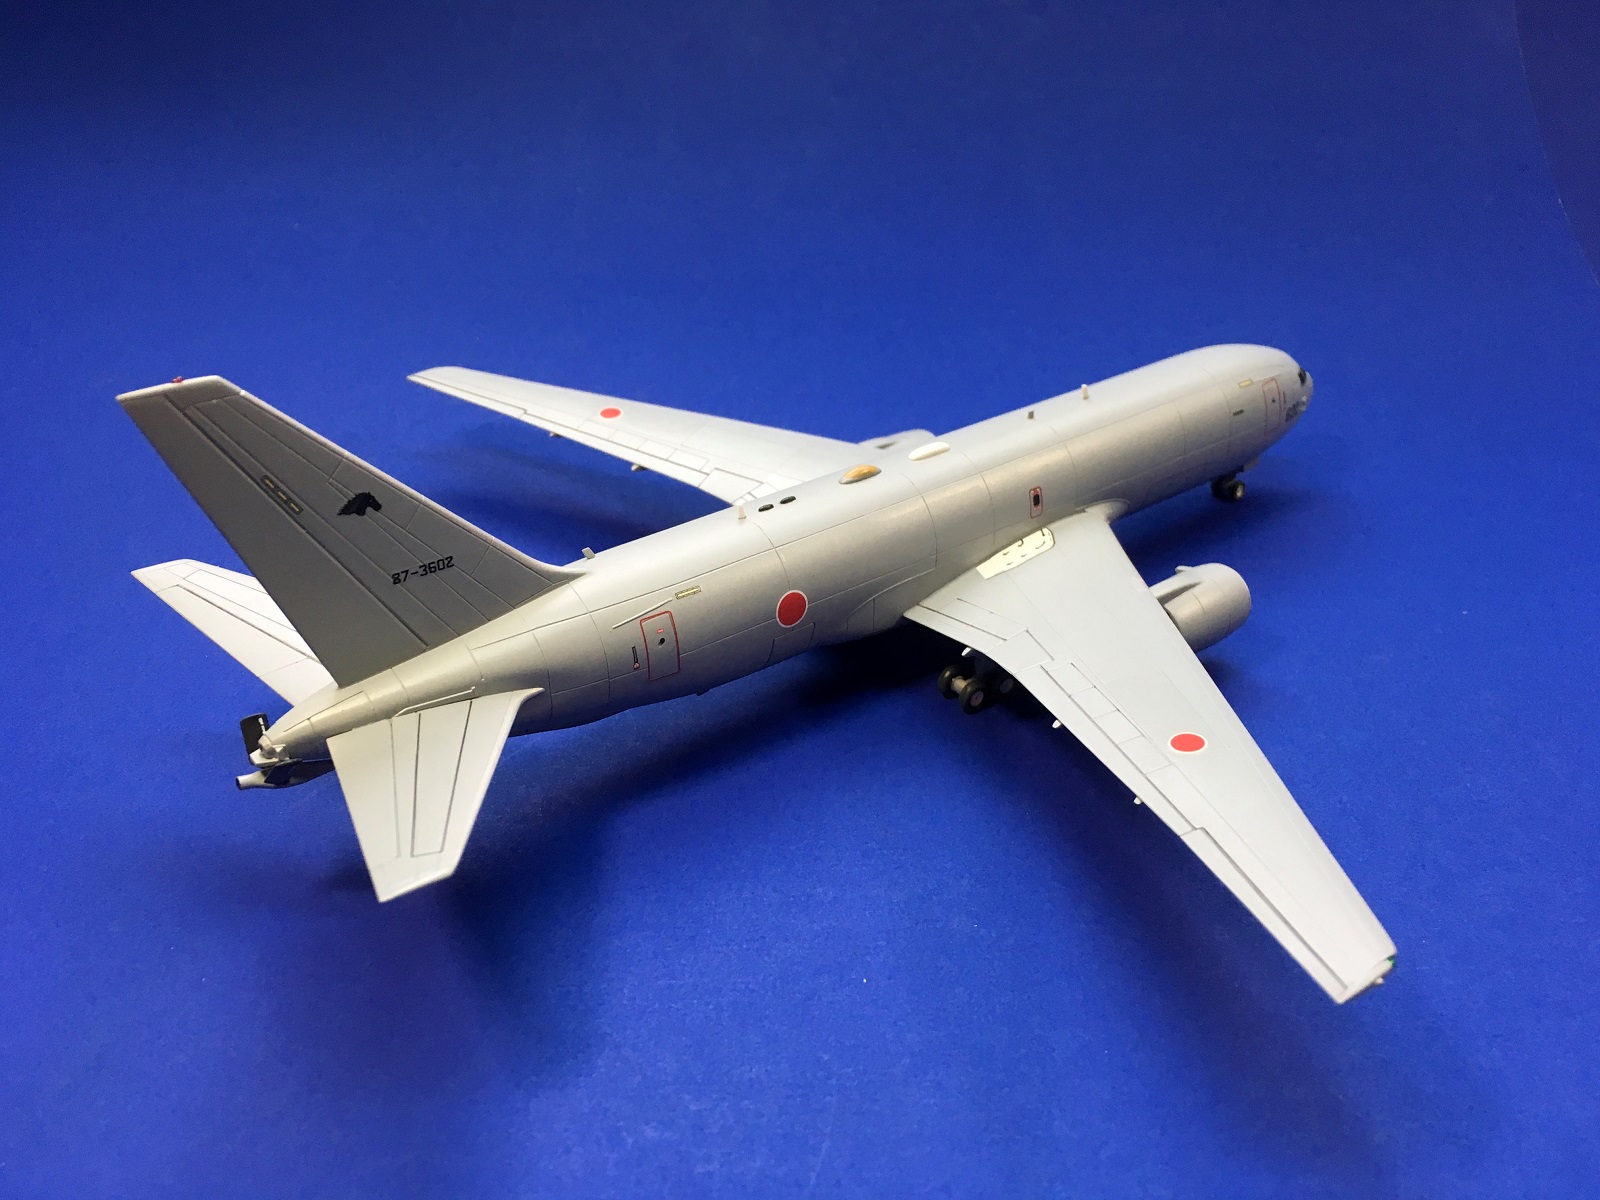 Hasegawa 10802 KC-767J & E-767 AWACS 'J.A.S.D.F.'